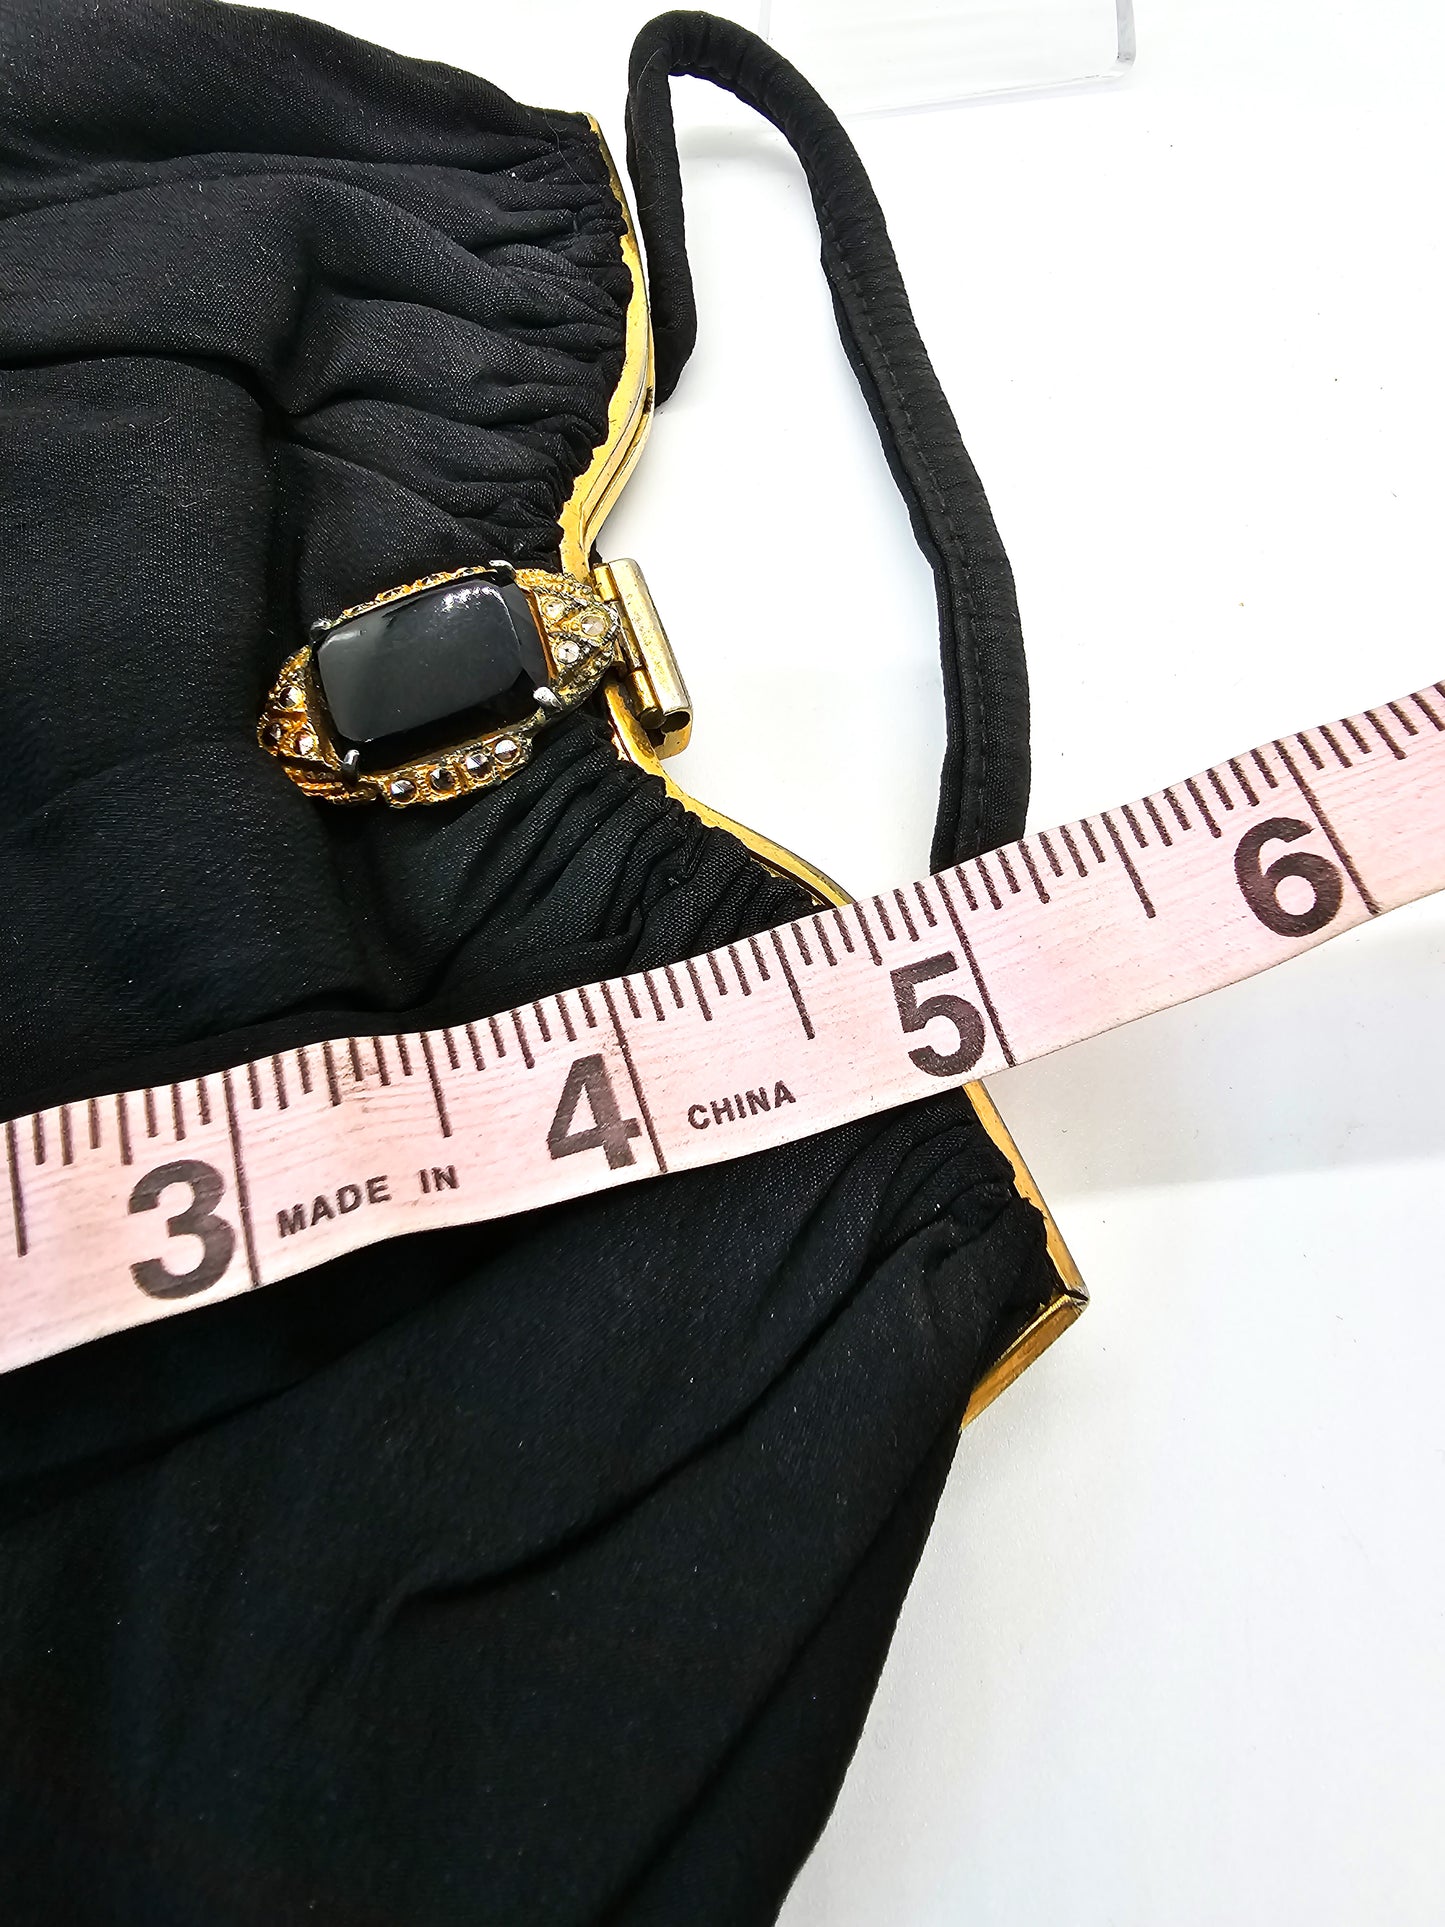 Art Deco Marcasite handmade vintage black and gold cloth purse handbag